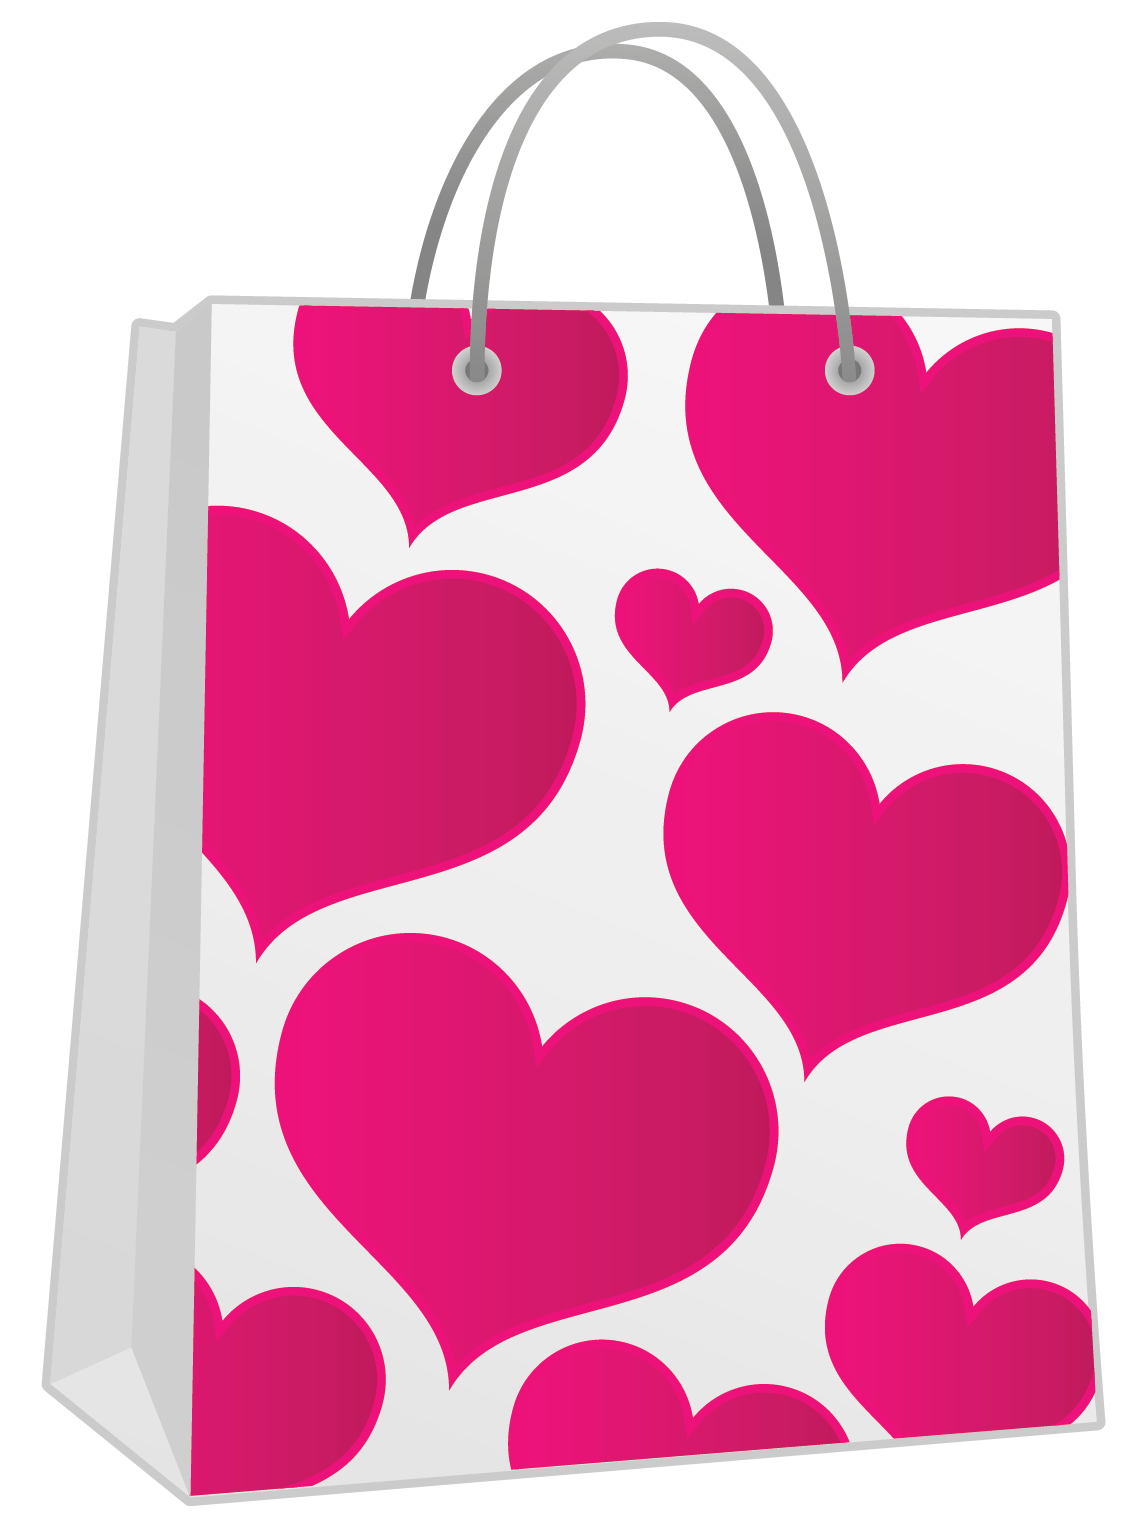 pink shopping bag clip art